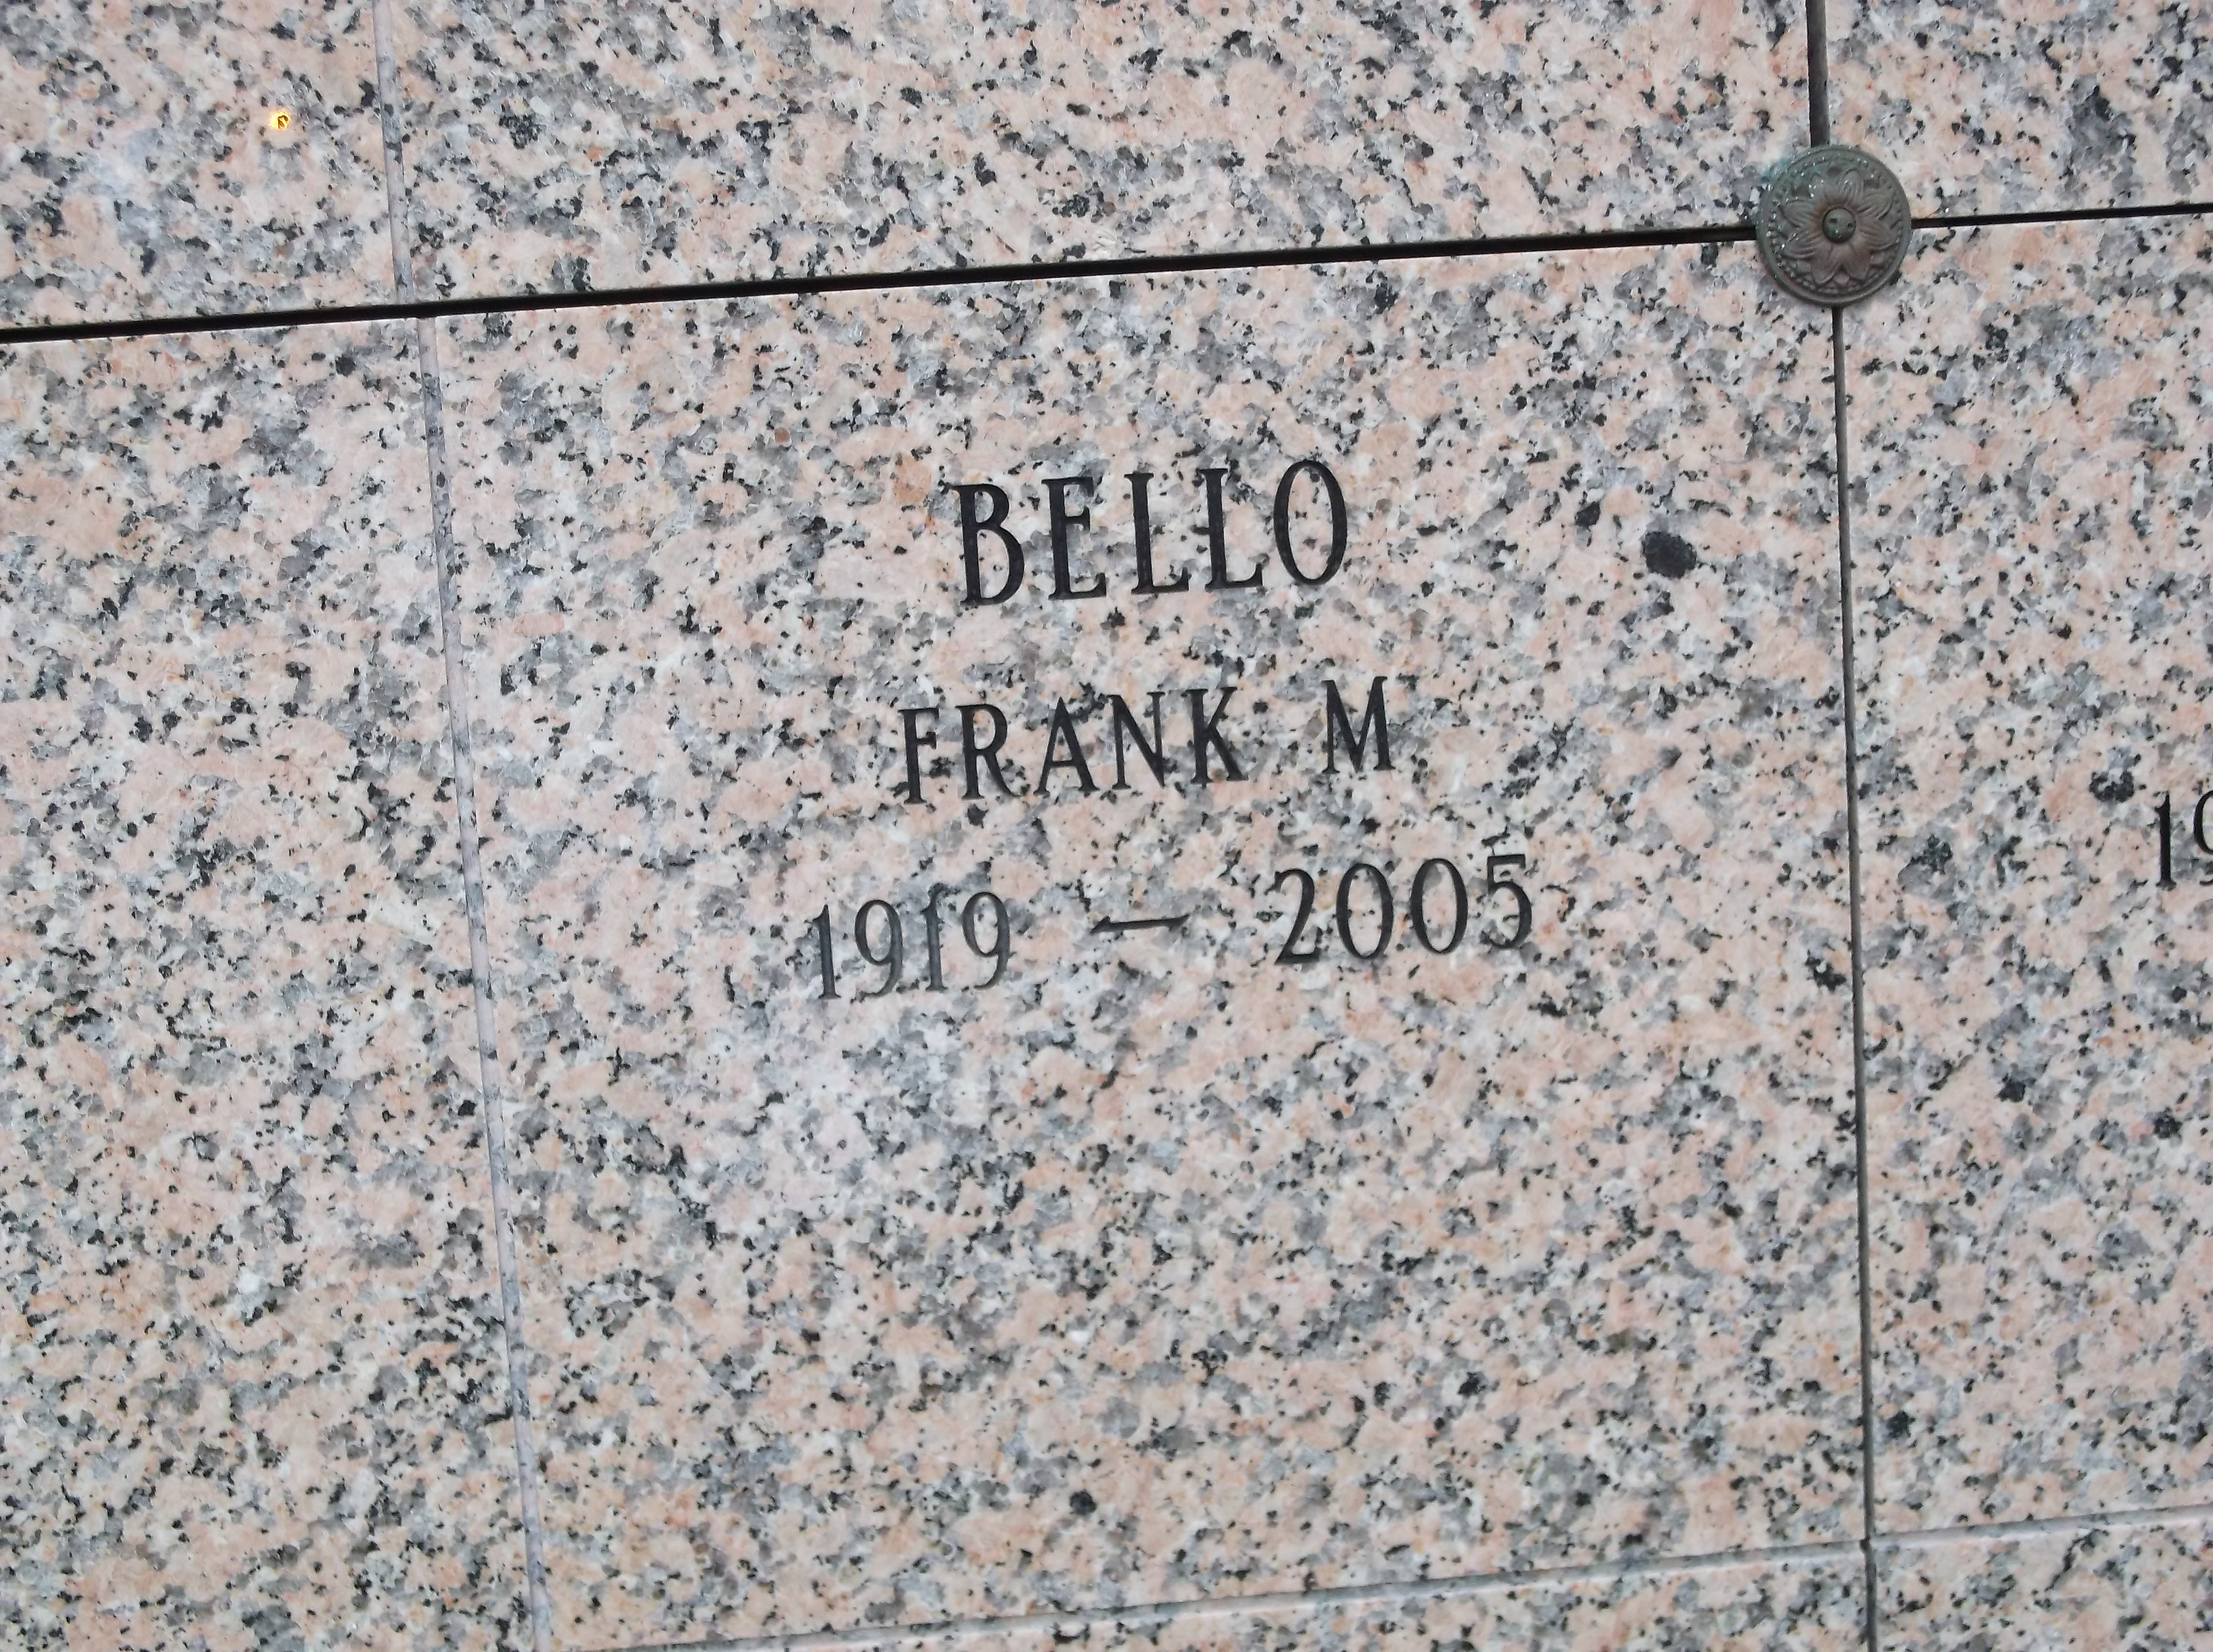 Frank M Bello